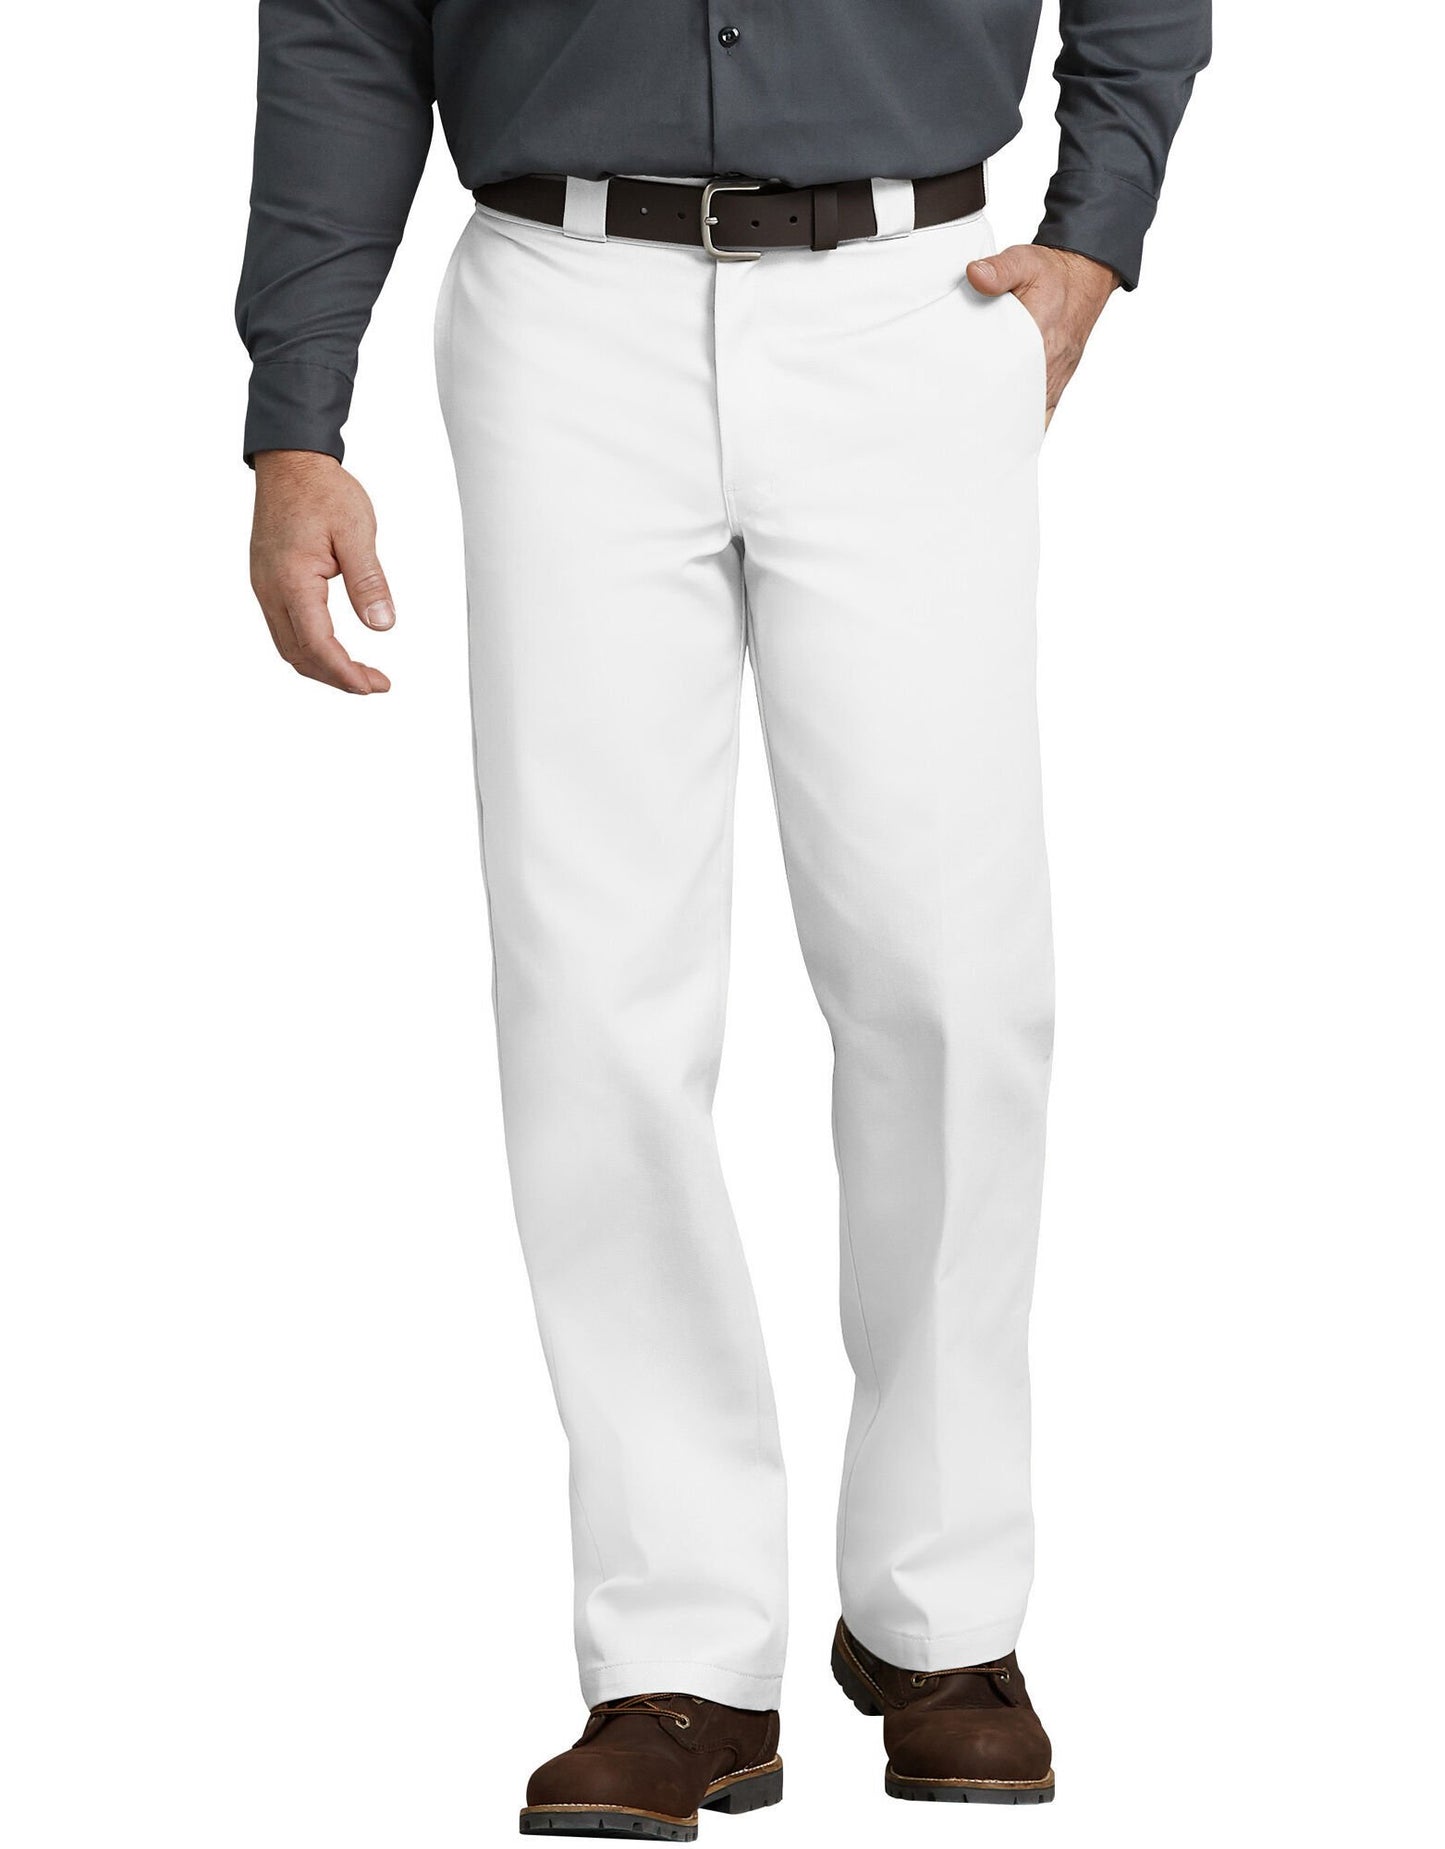 Original 874® Work Pants, White